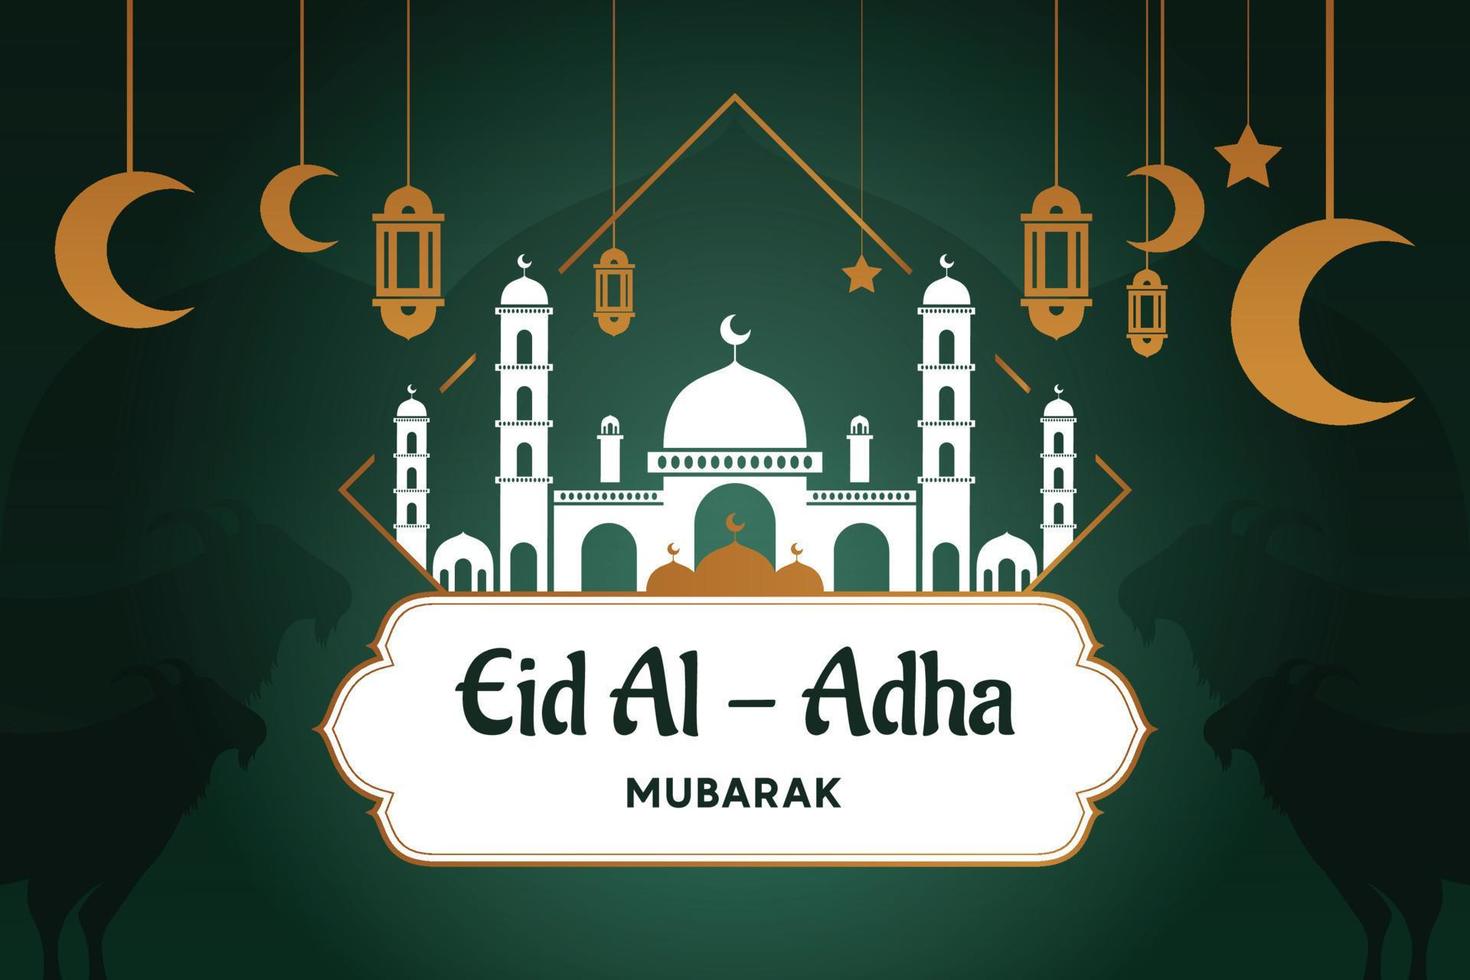 Eid Mubarak celebration Greeting card template. Festive design for Muslim festival Eid Al Adha with goat, silhouette of mosque, lanterns and crescent. Vector illustration.